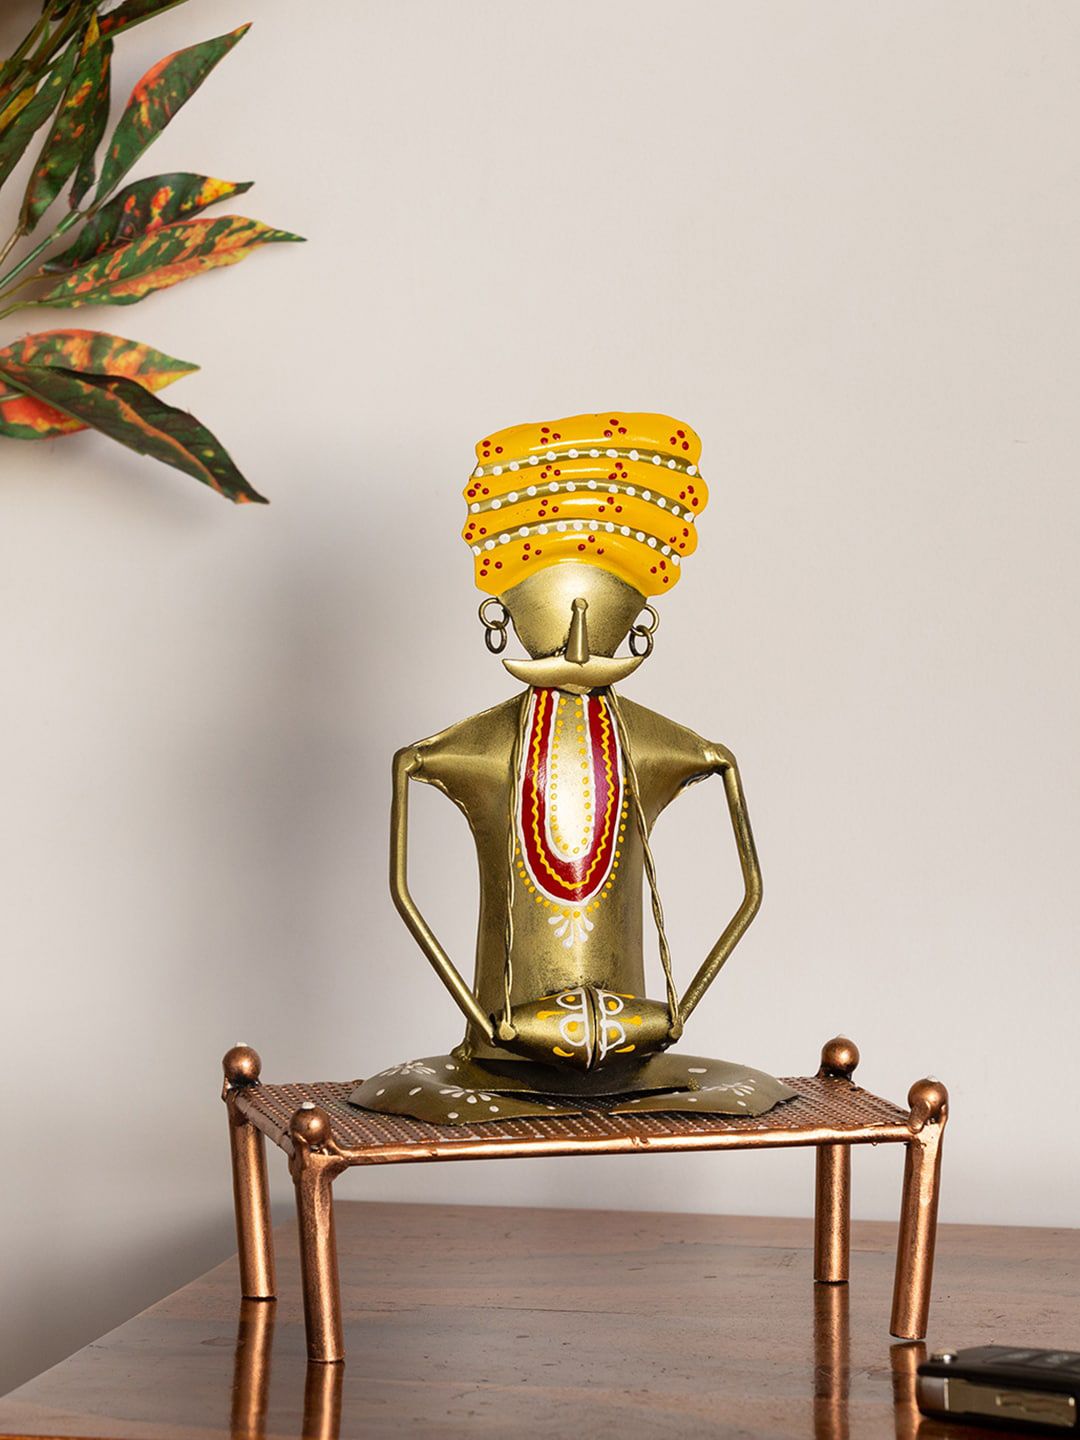 ExclusiveLane Gold-Toned & Yellow Handpainted Decorative Showpiece Price in India